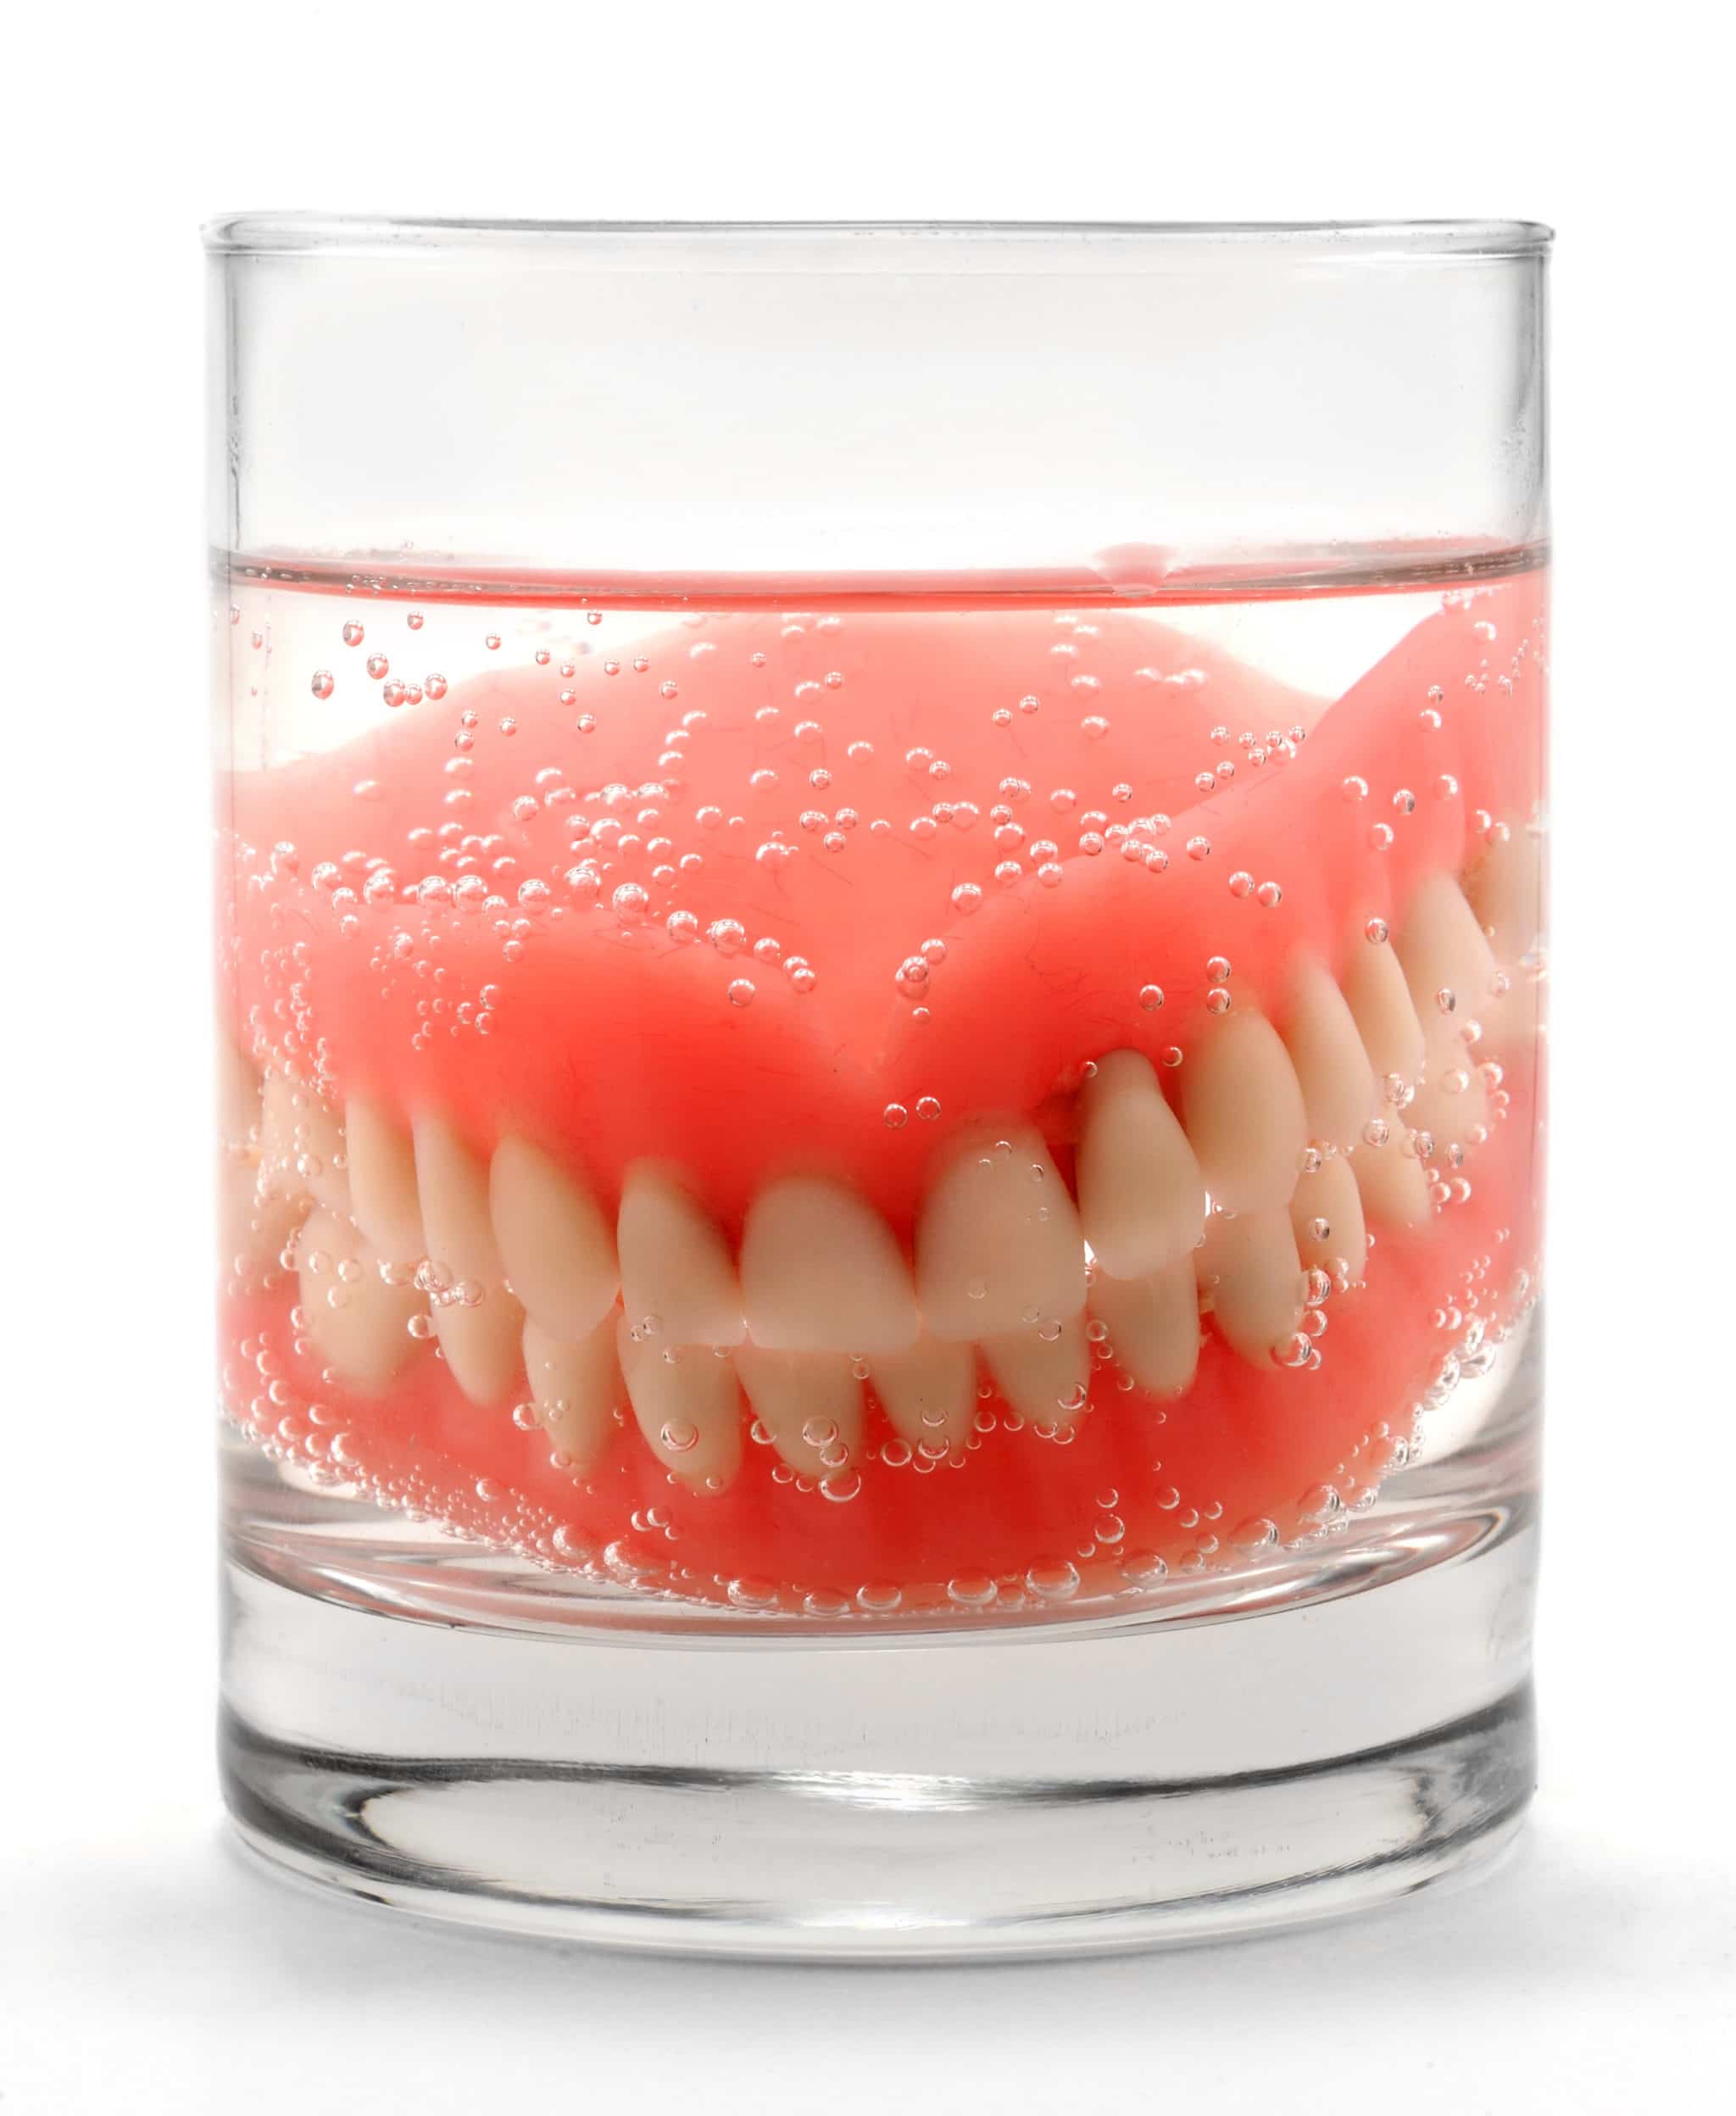 dentures soaking in solution